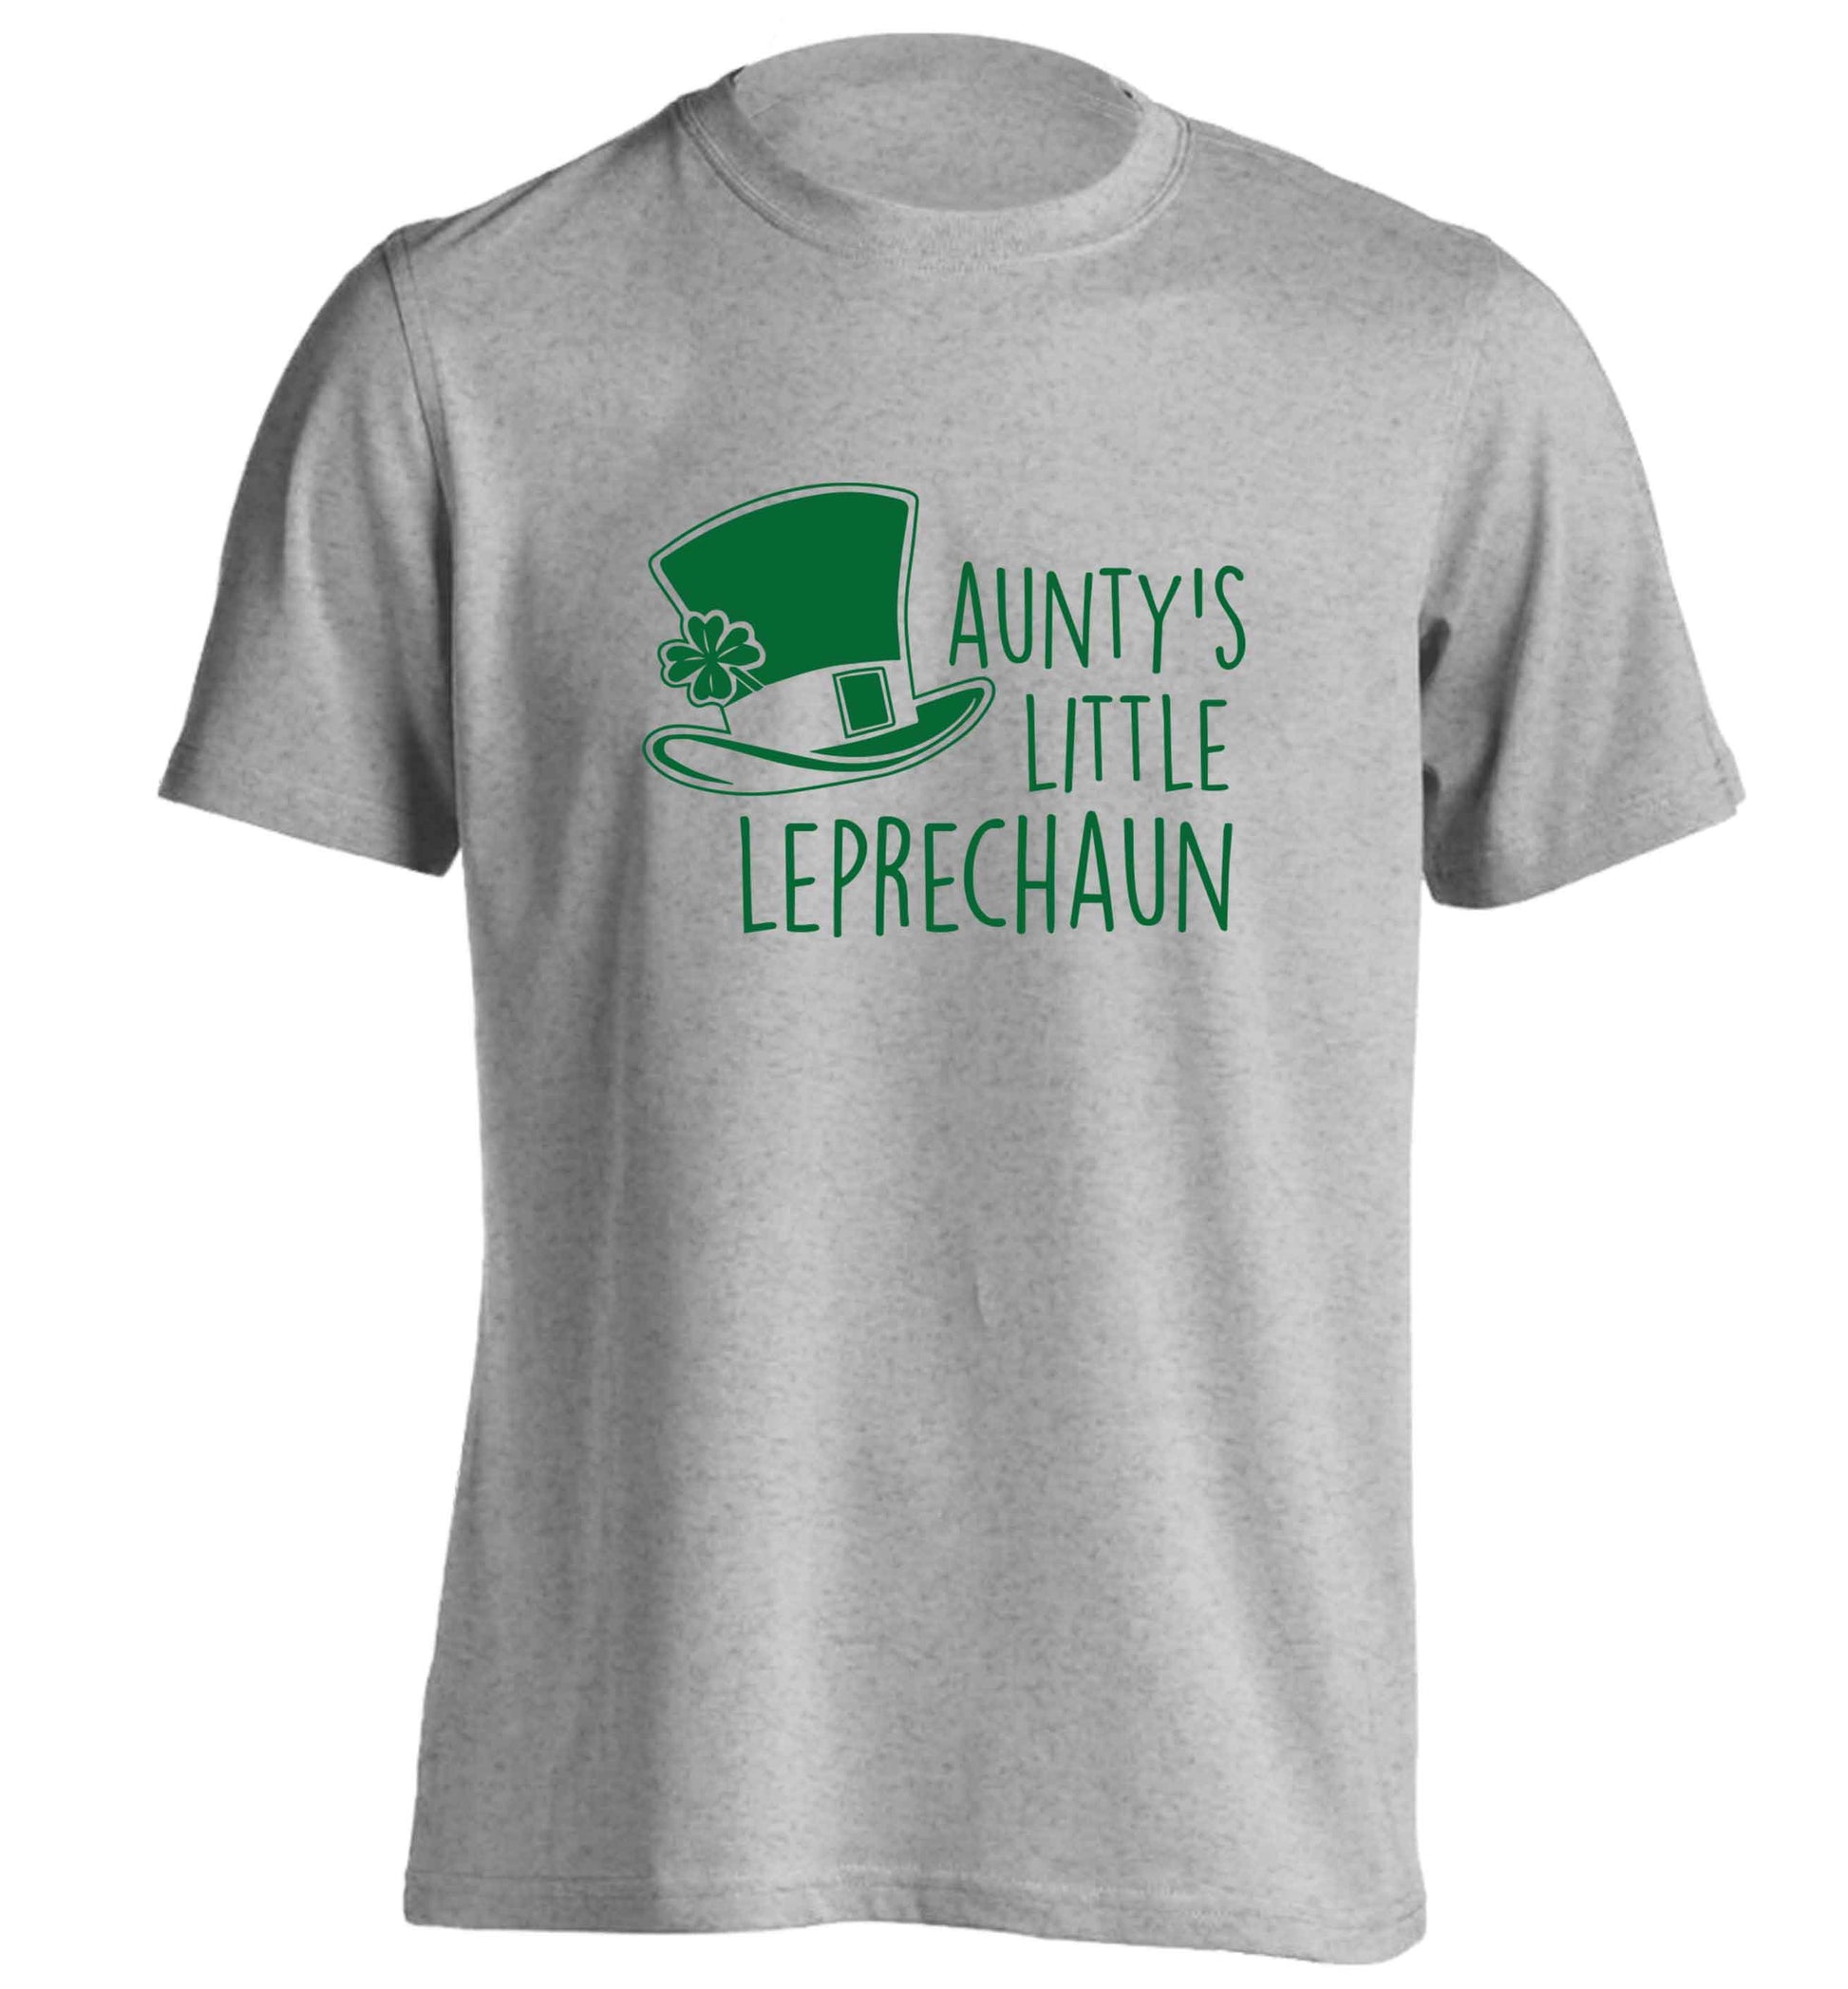 Aunty's little leprechaun adults unisex grey Tshirt 2XL